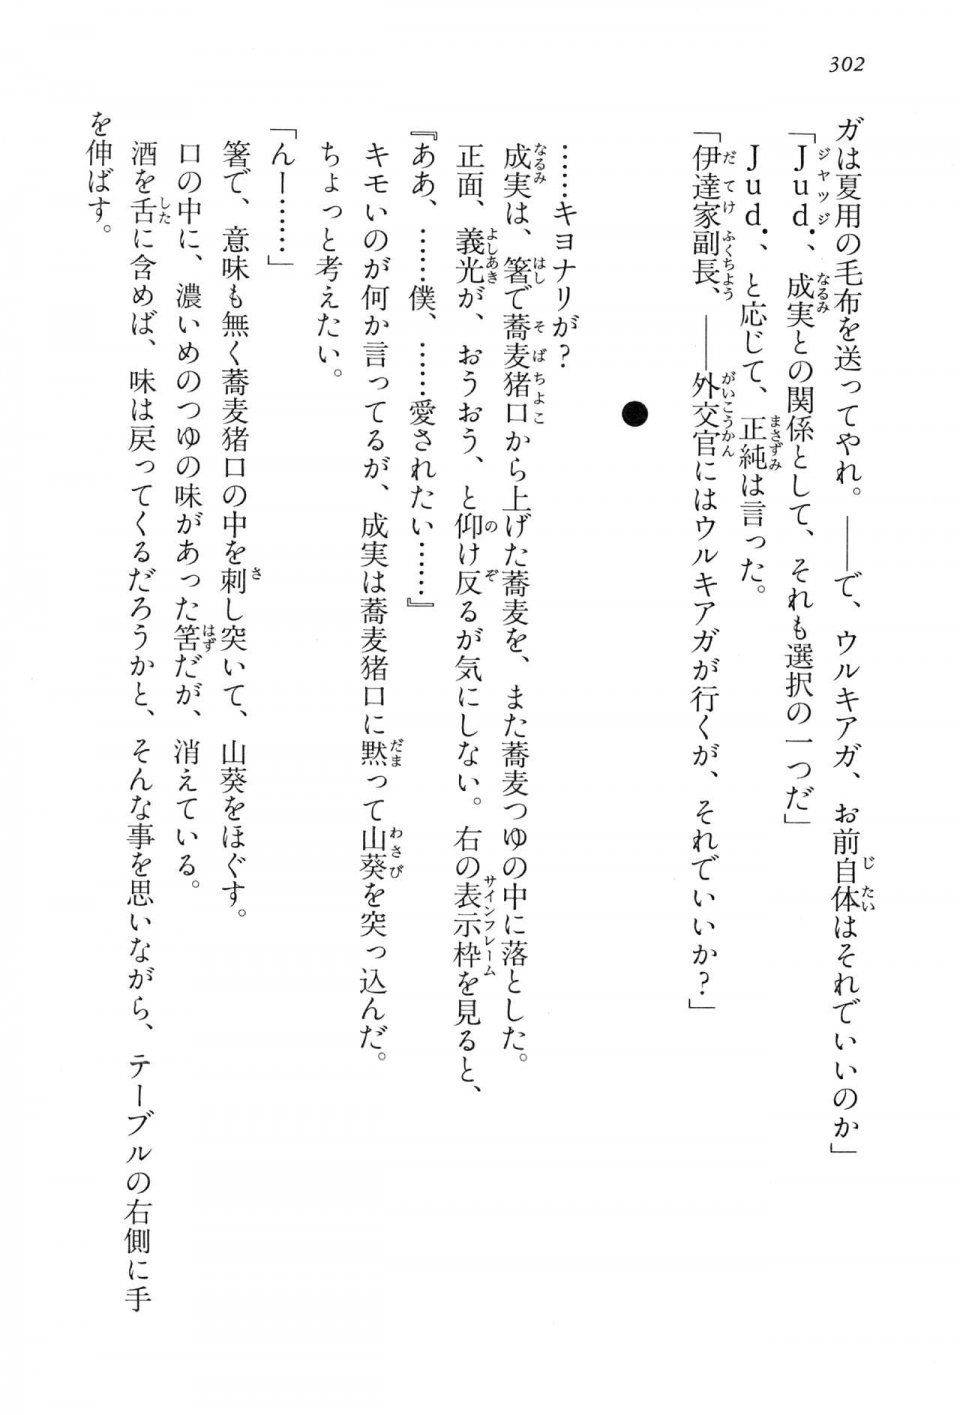 Kyoukai Senjou no Horizon LN Vol 15(6C) Part 1 - Photo #302